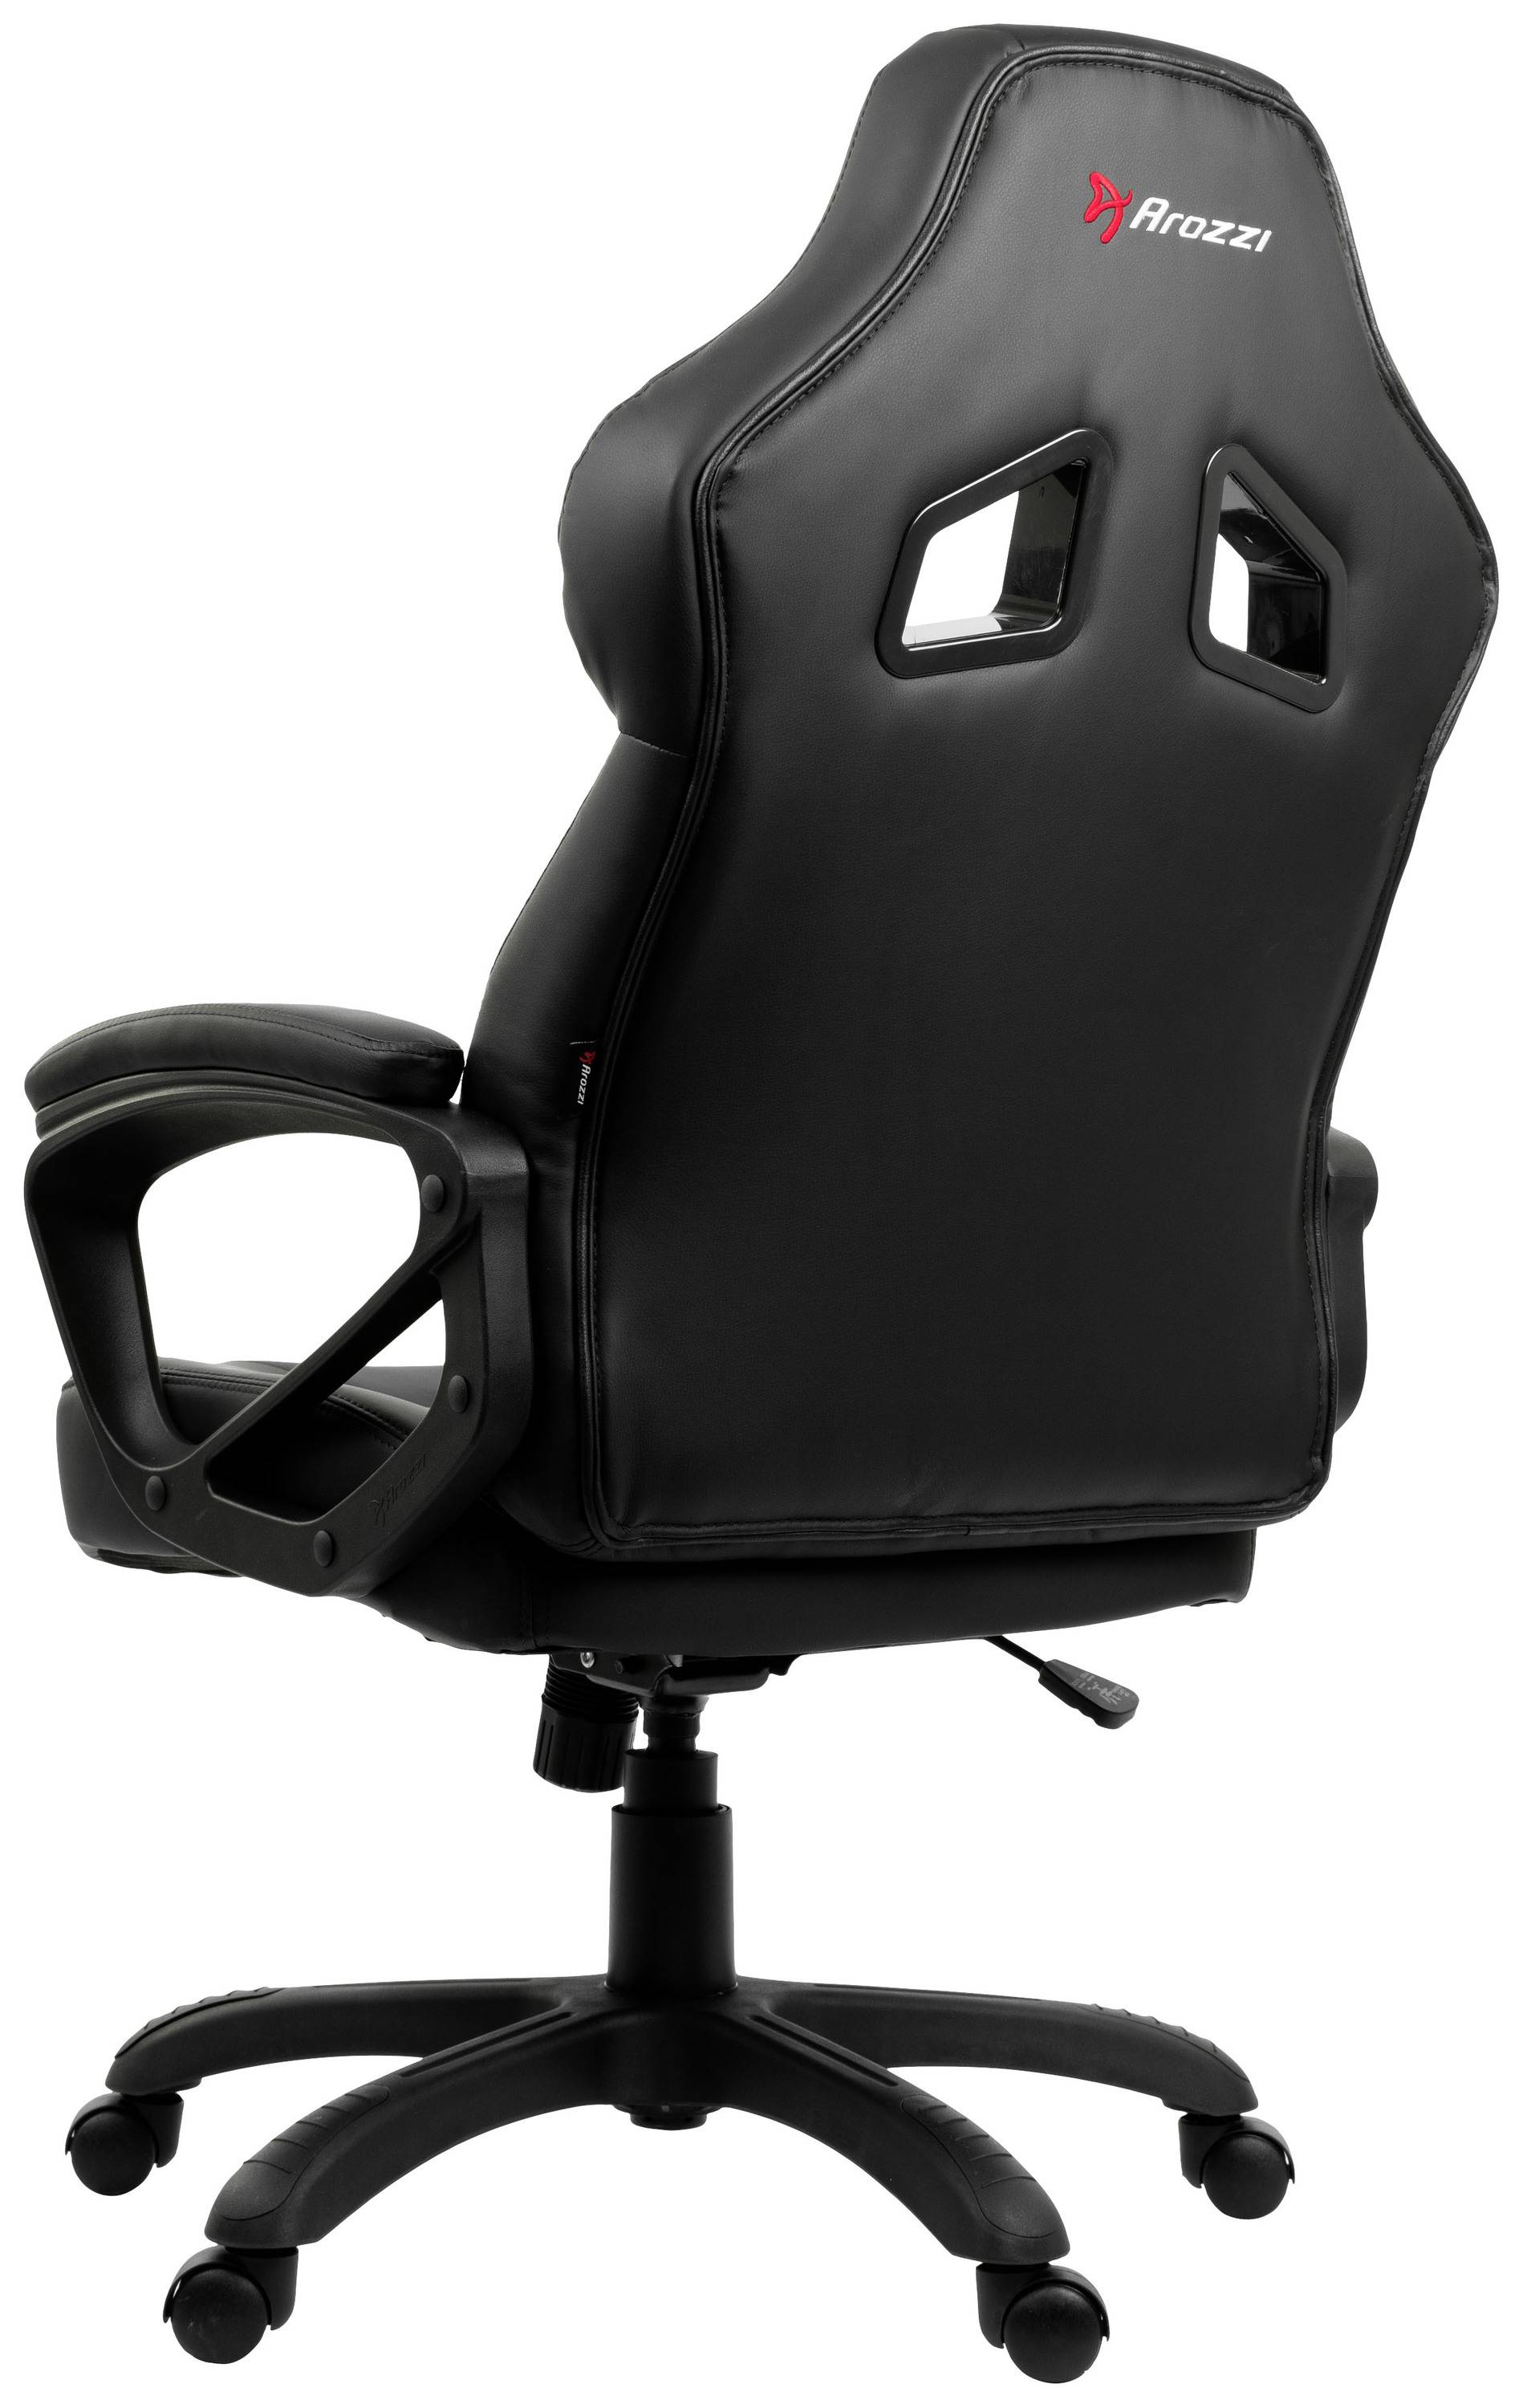 Arozzi MONZA Gaming chair Black | Conrad.com